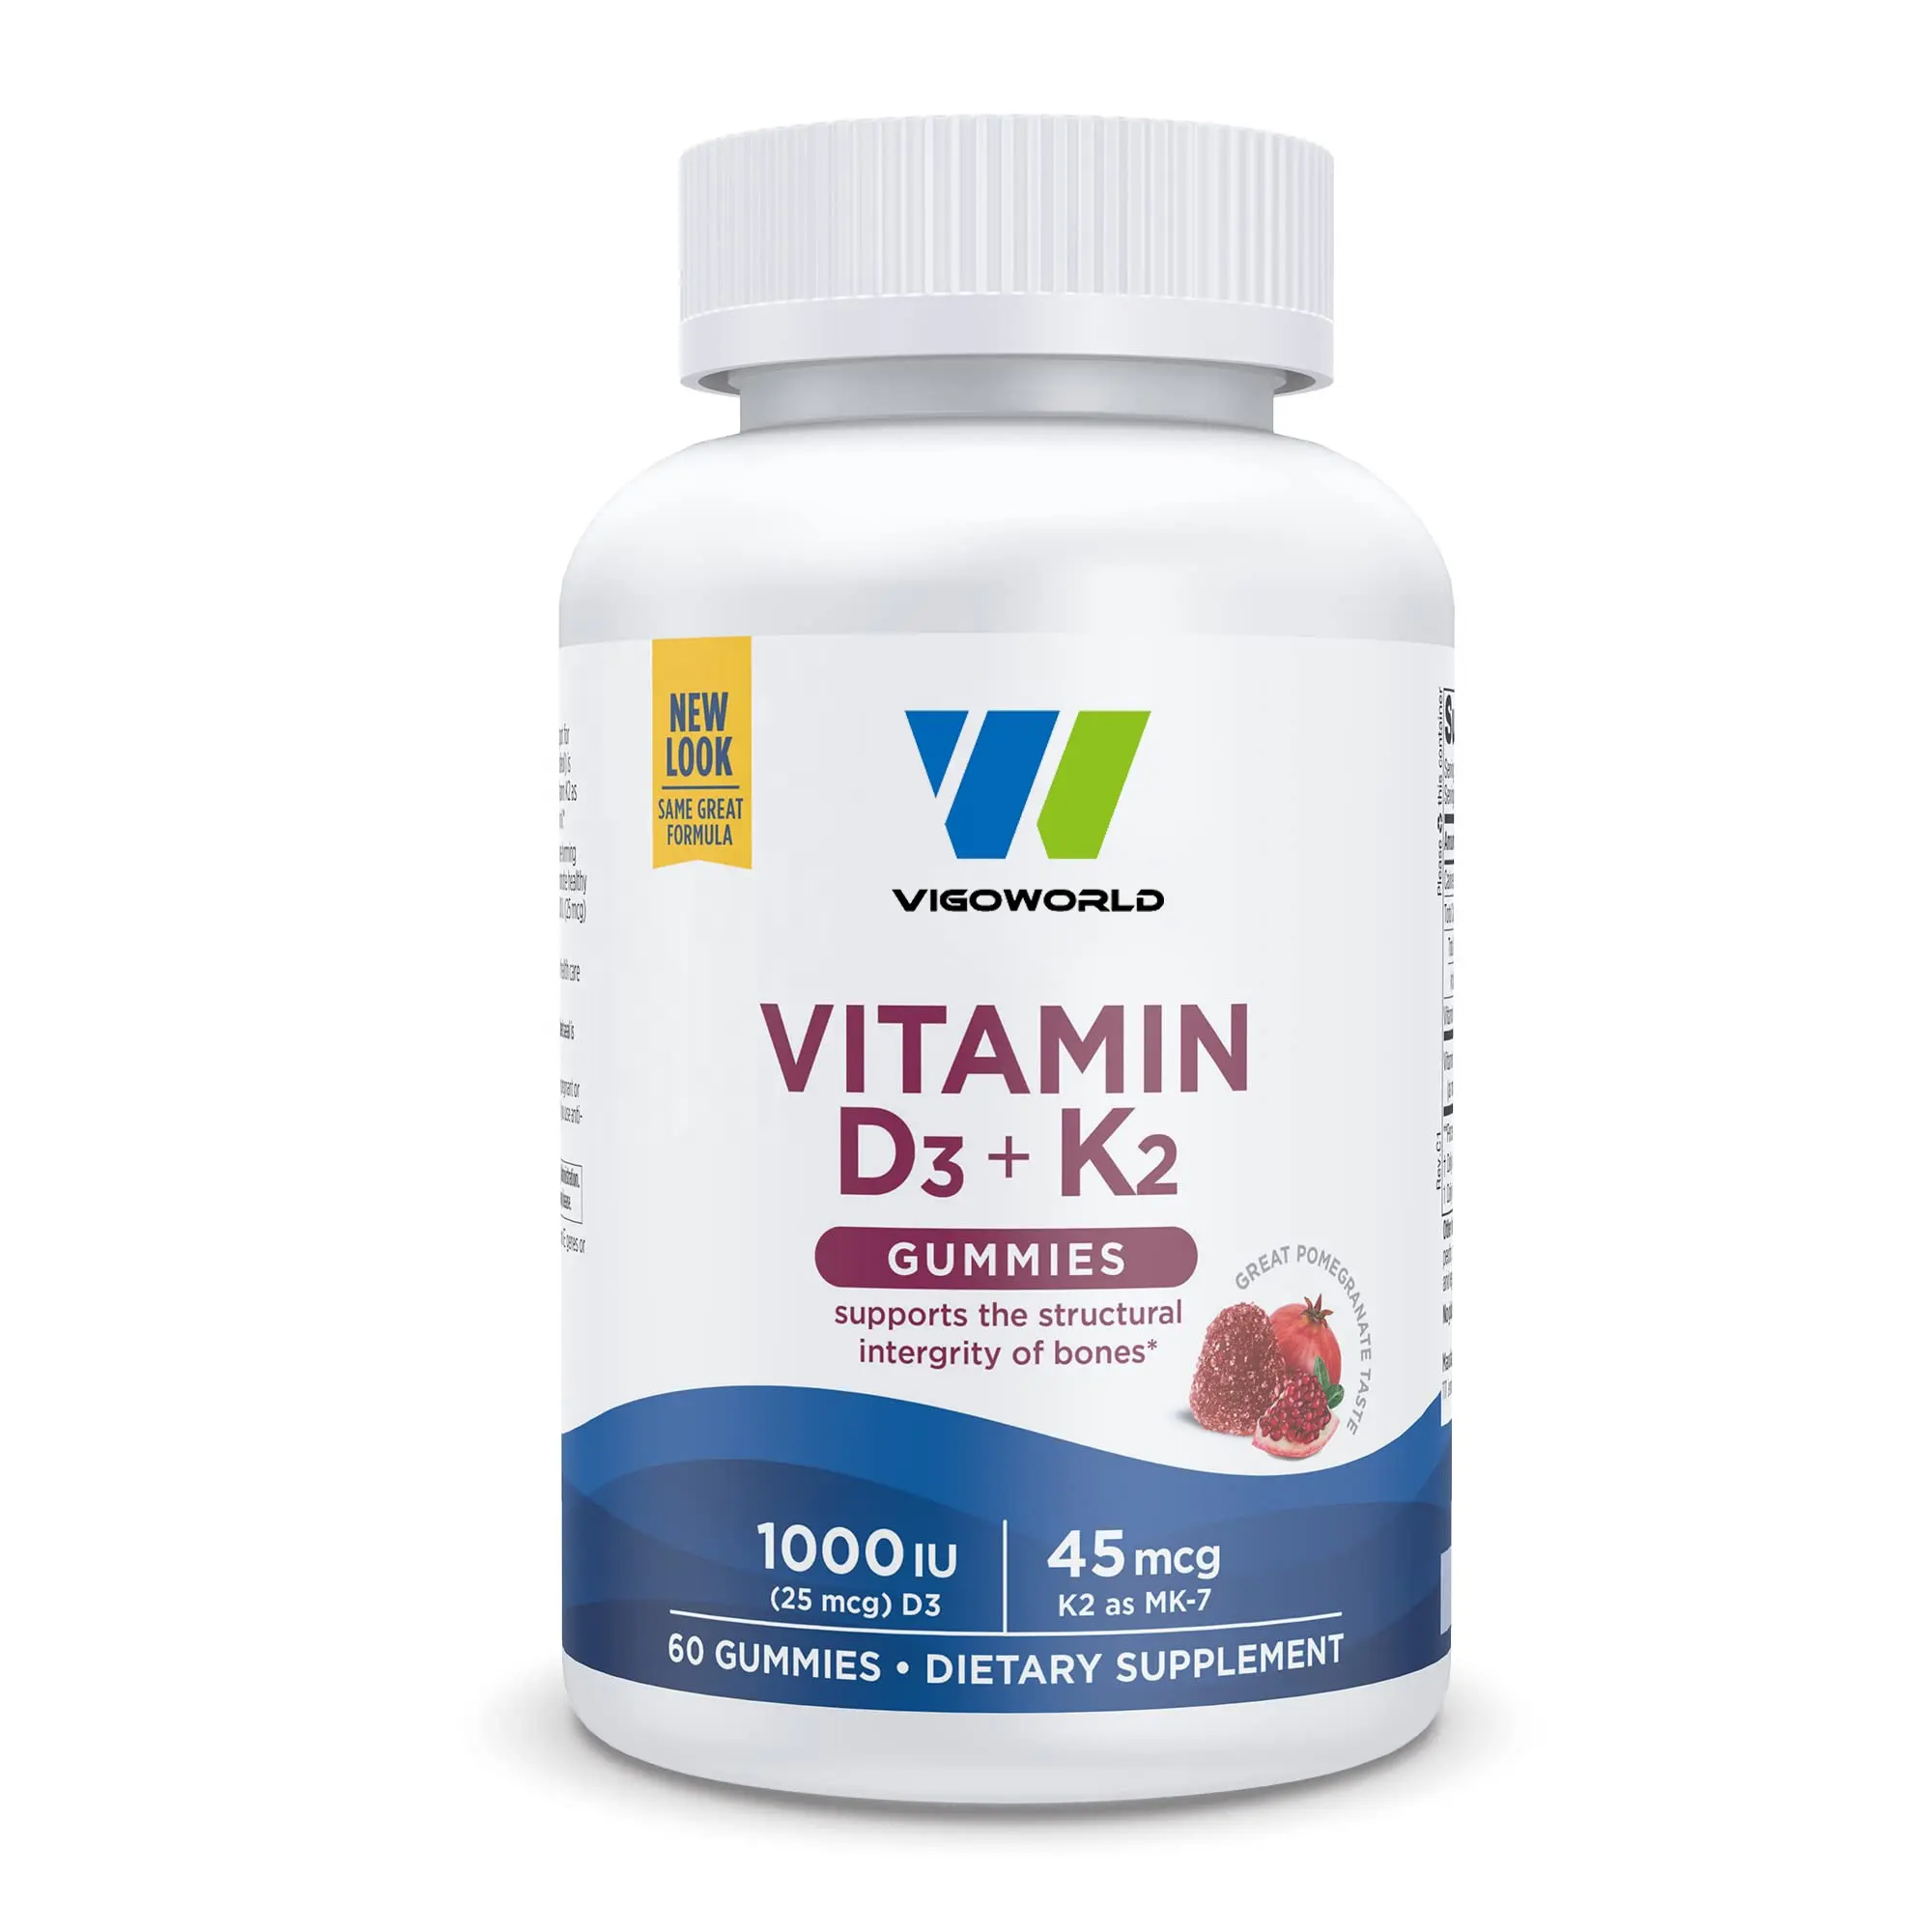 Vitamina d3 + k2 gomas promove função muscular saudável